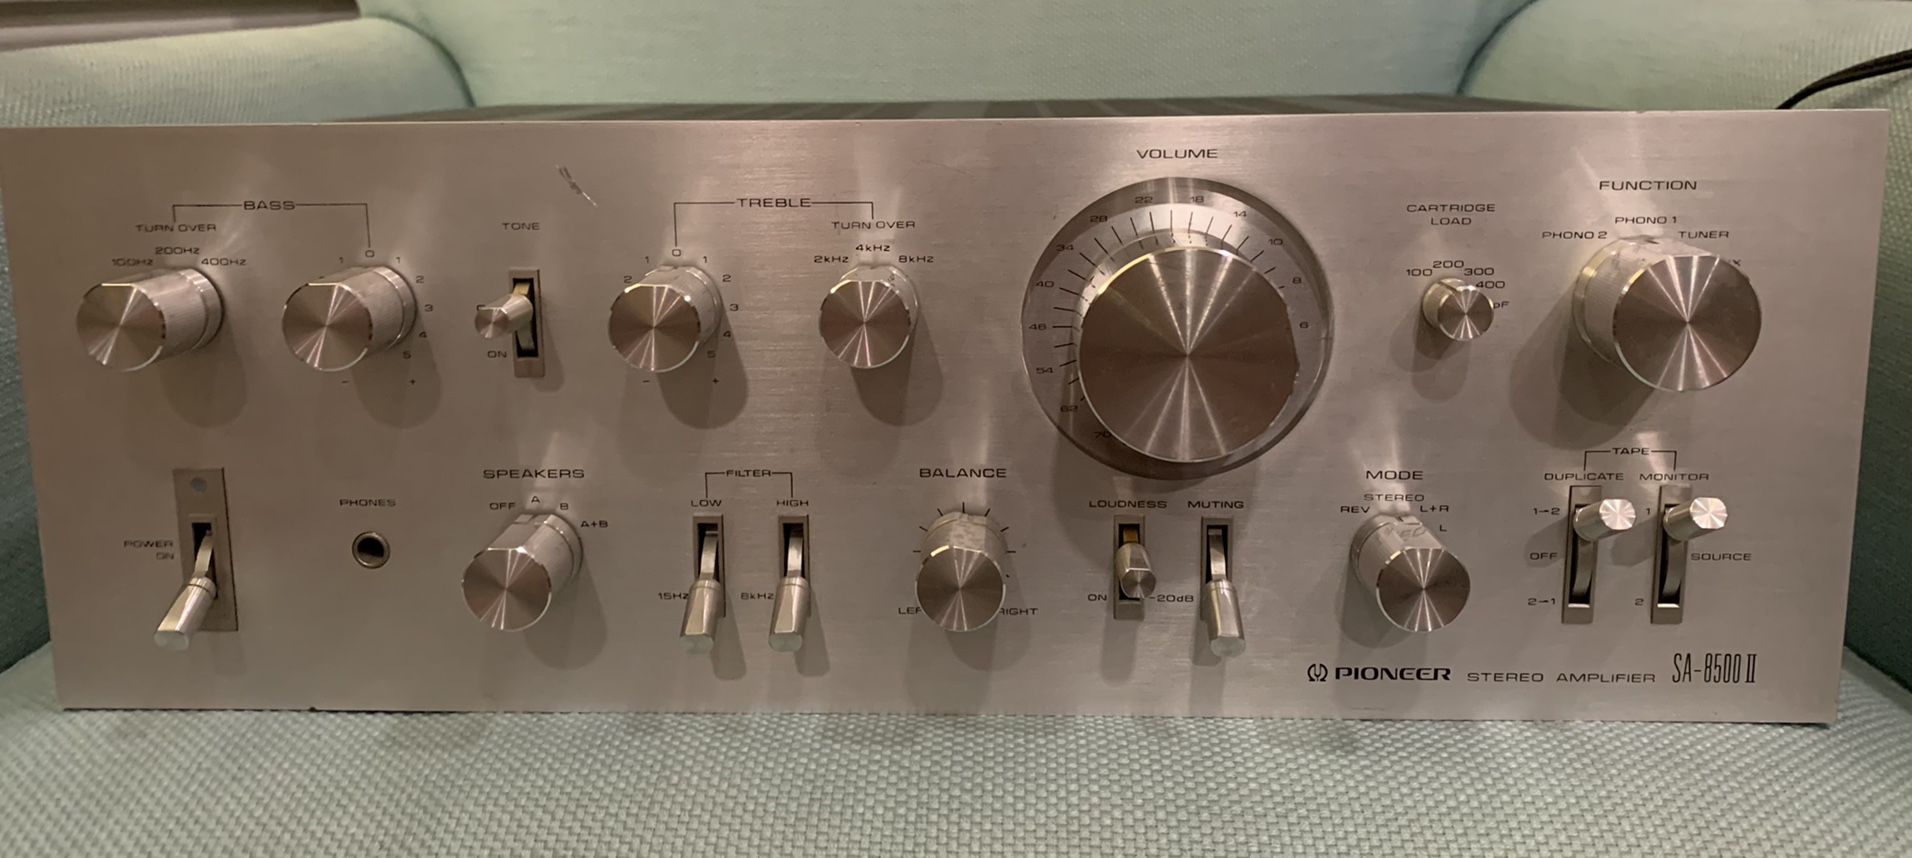 Vintage Amp! Pioneer SA-8500 II Integrated Amplifier 